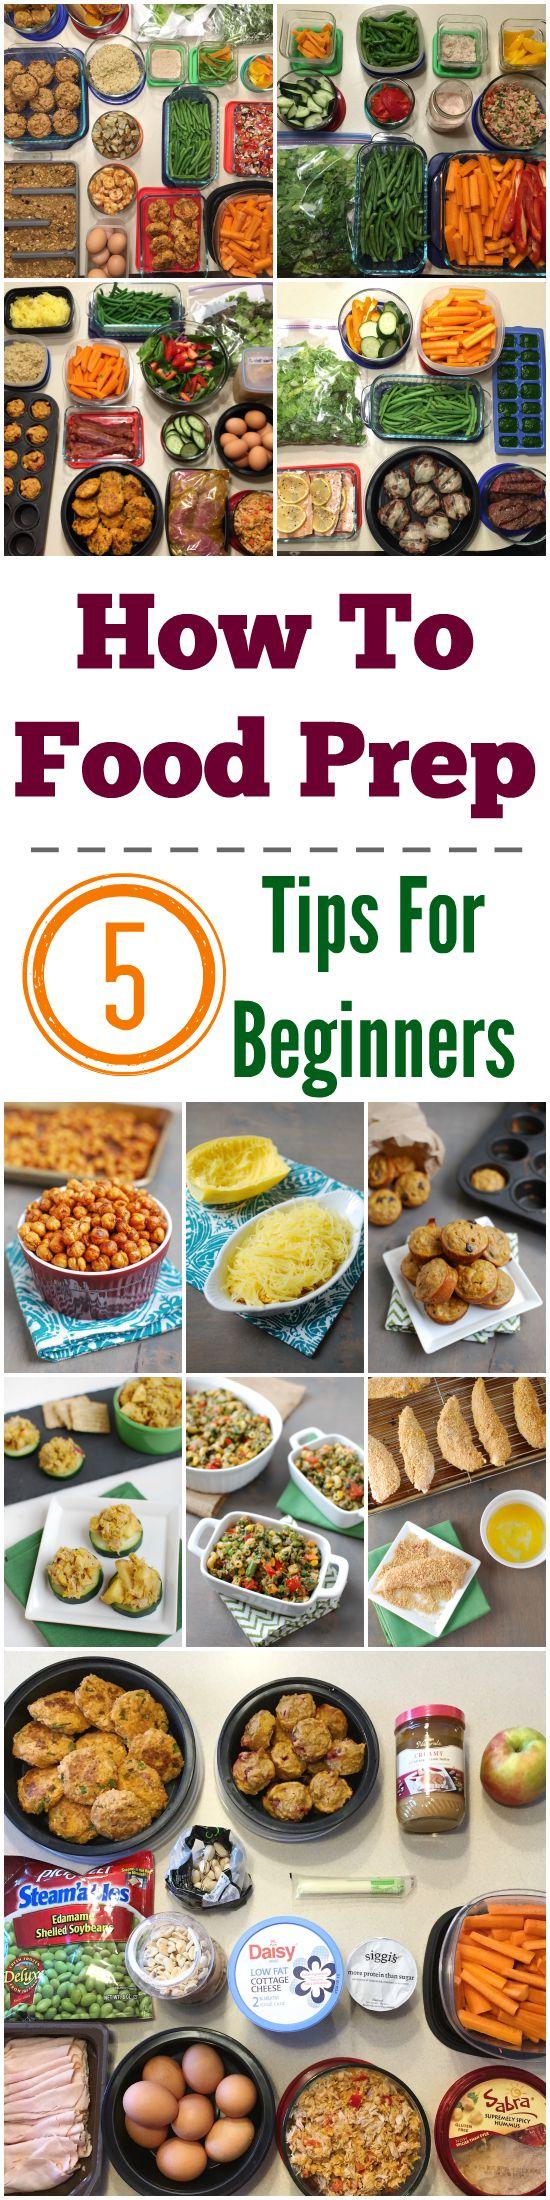 The Beginner's Guide to Meal Prepping, Fresh Start